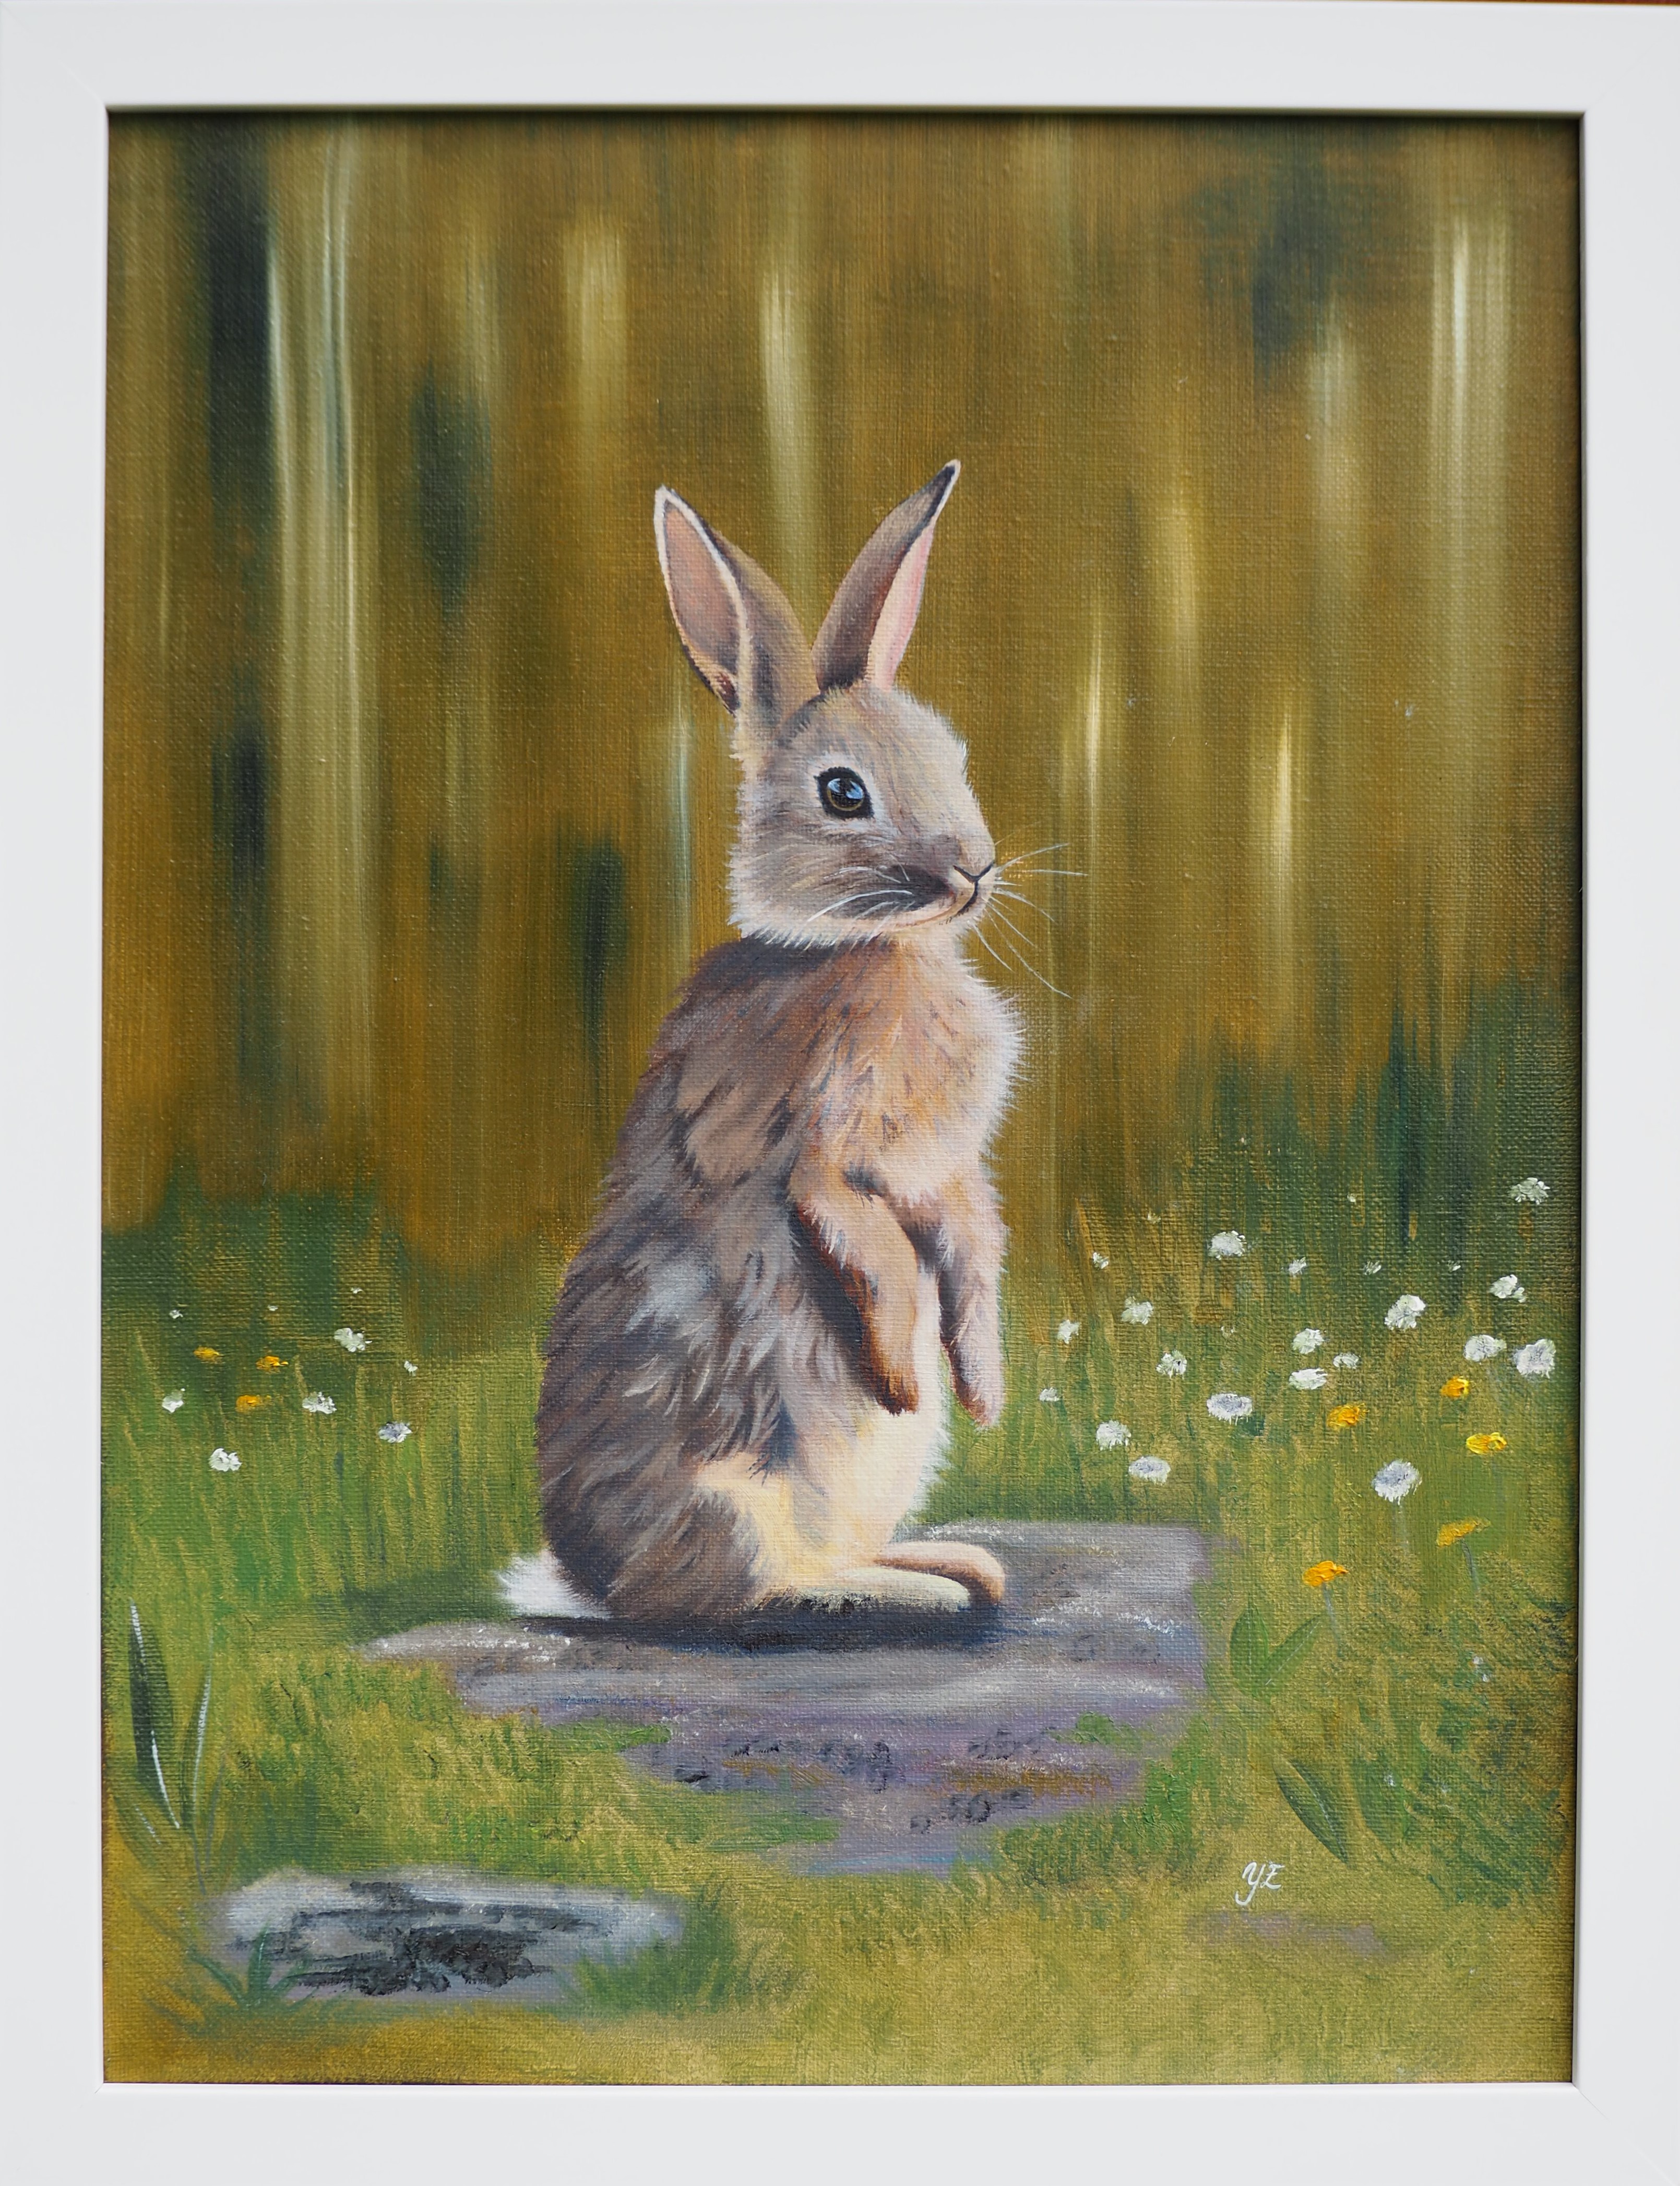 Hare i skogsbrynet - Orginalmålning i olja